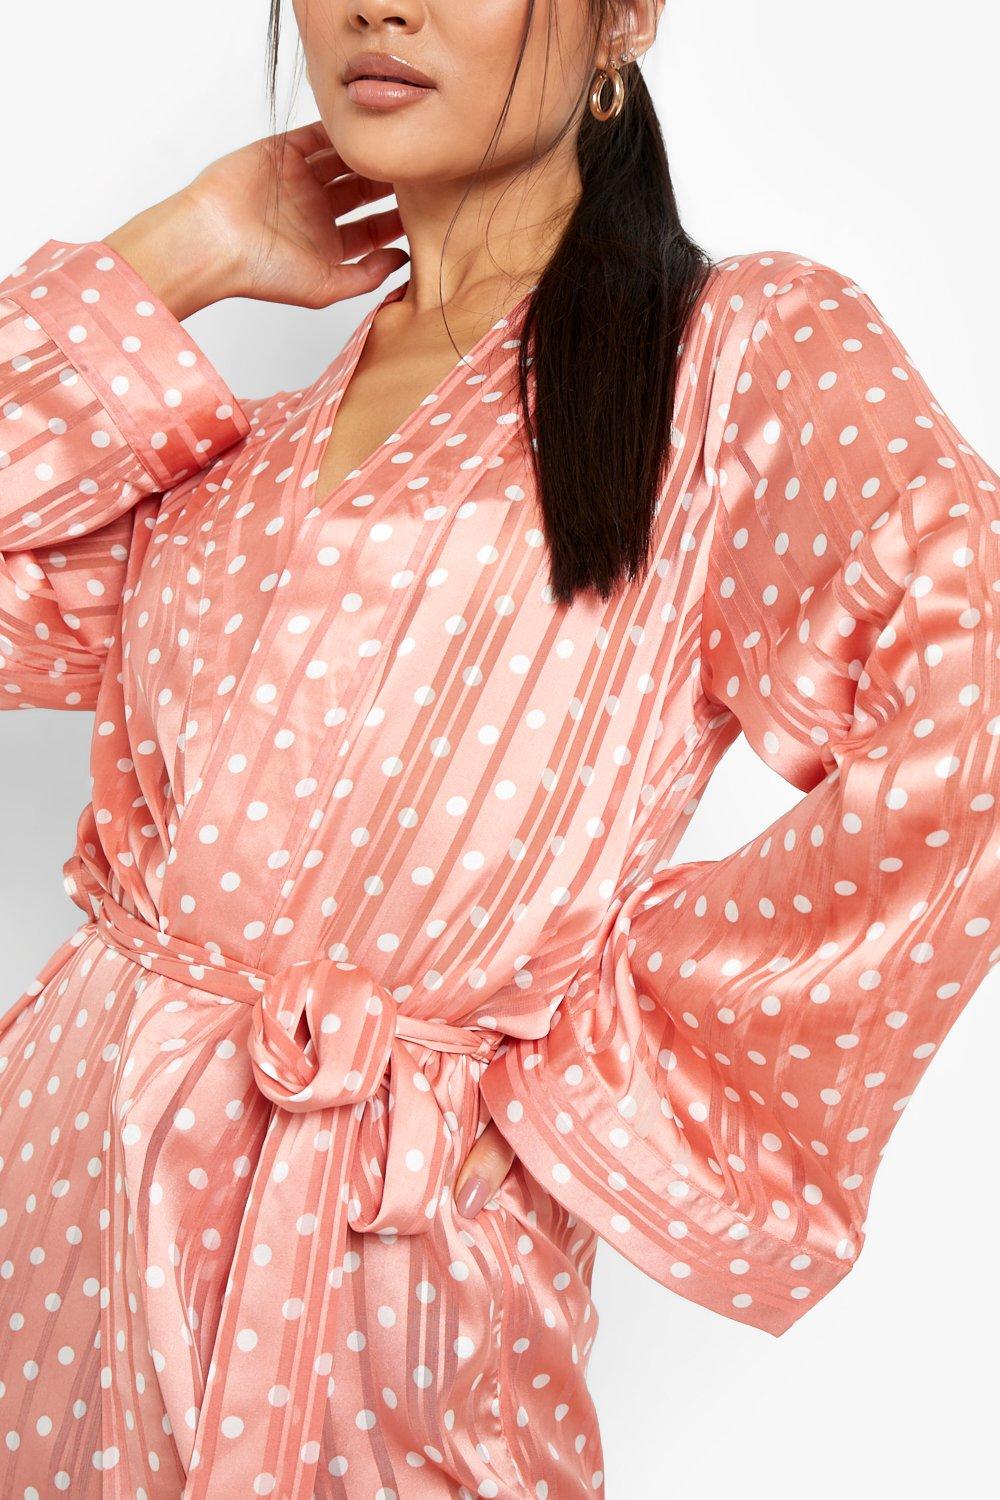 Boohoo Spot & Sheer Stripe Satin Robe in Camel robe dresses and bathrobes Womens Clothing Nightwear and sleepwear Robes Pink 